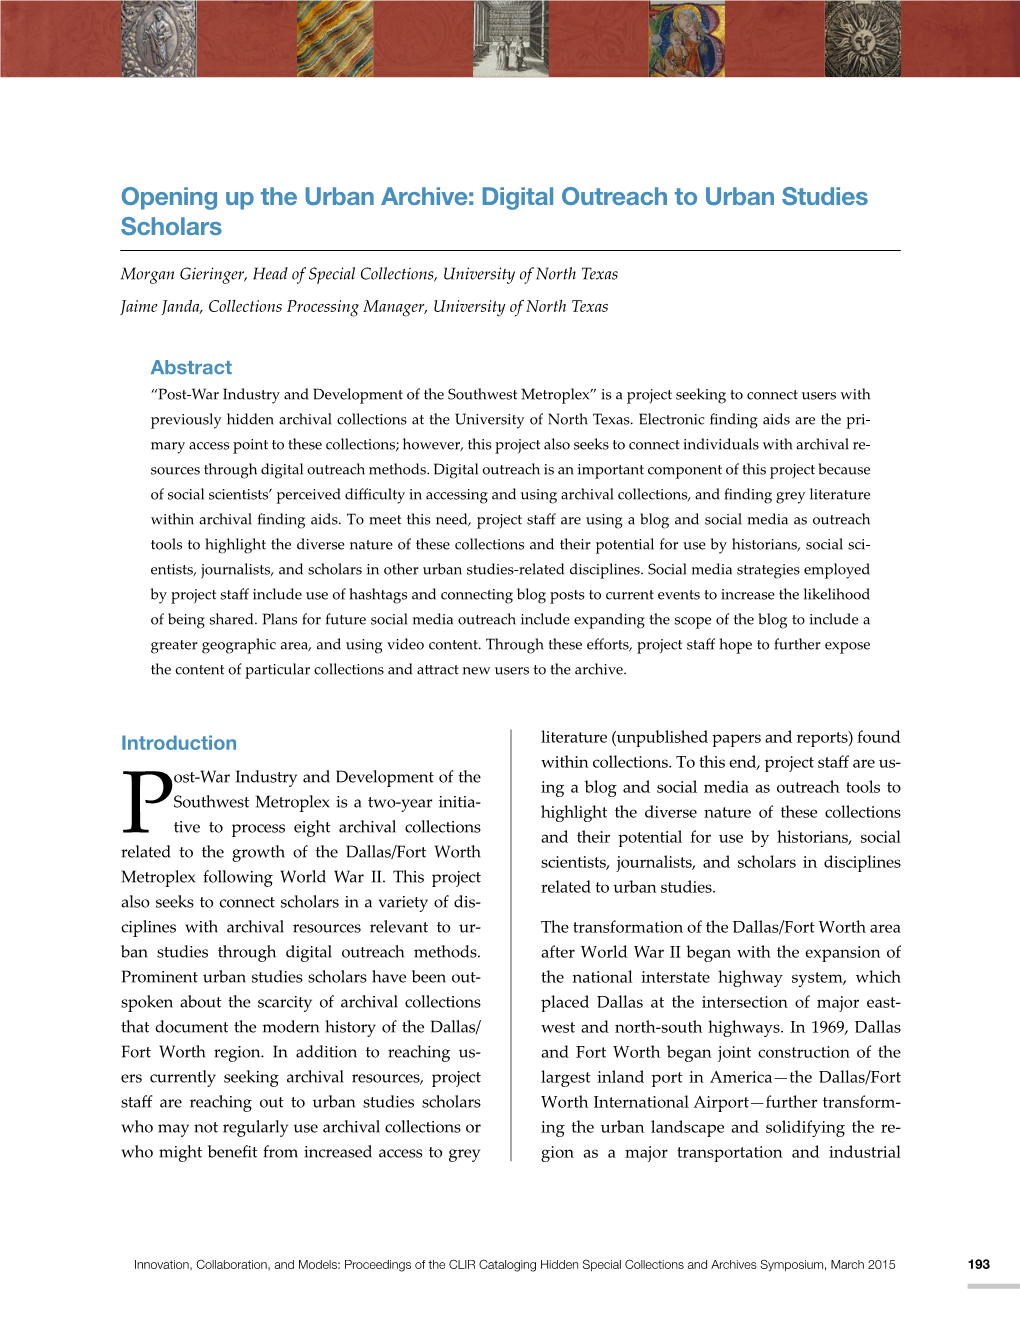 Digital Outreach to Urban Studies Scholars